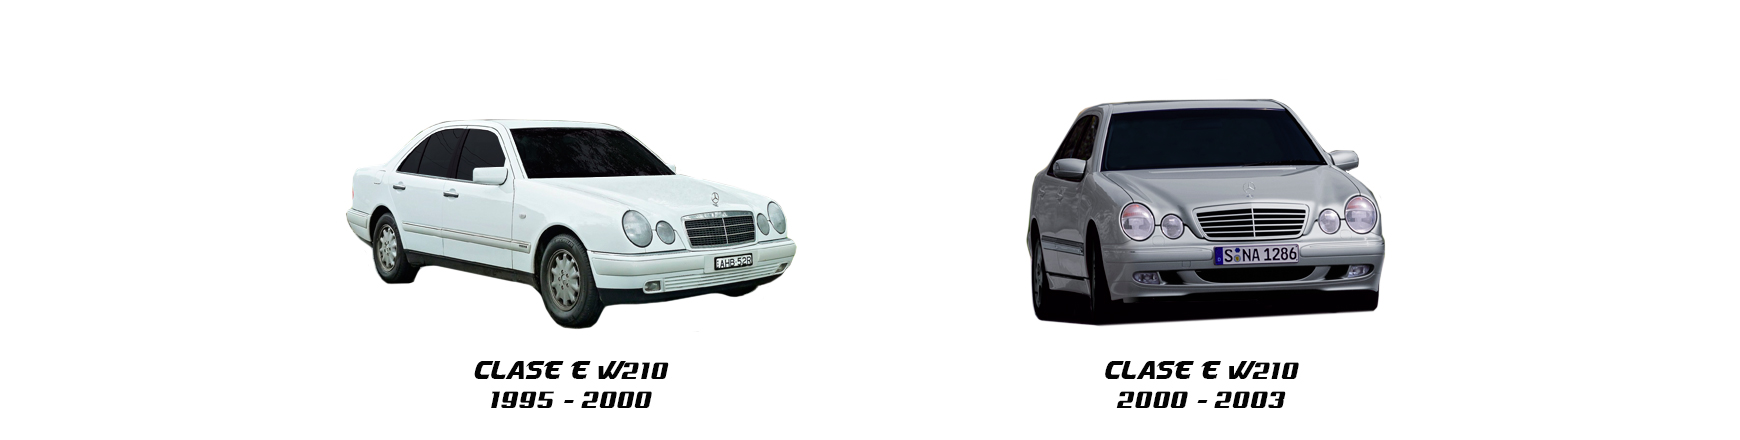 Recambios de Mercedes Clase E w210 de 1995 a 1999 baratos y con envío